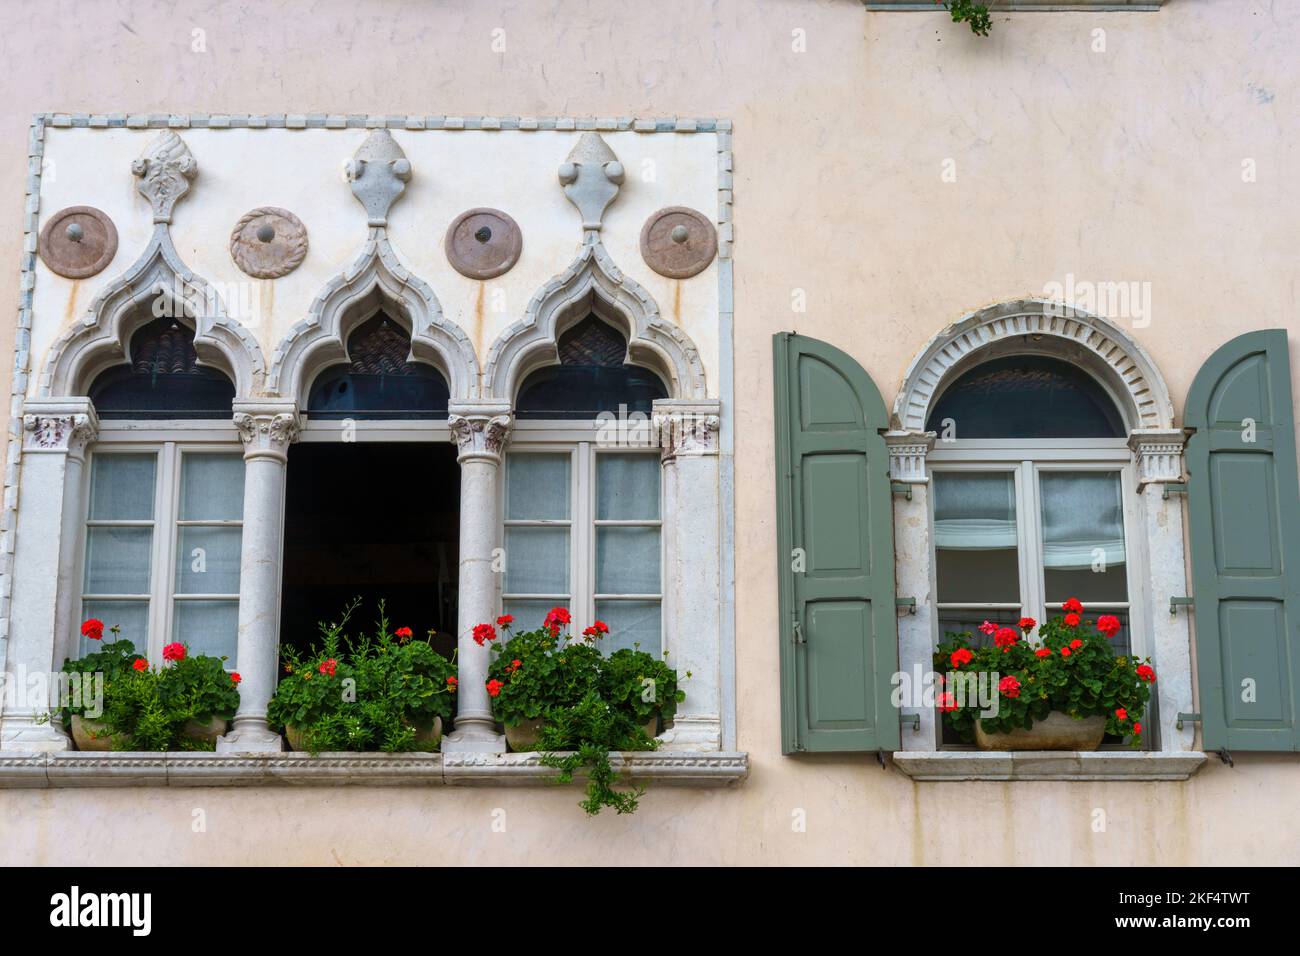 Exterior of historic buildings in Venzone, Udine province, Friuli-Venezia Giulia, Italy Stock Photo